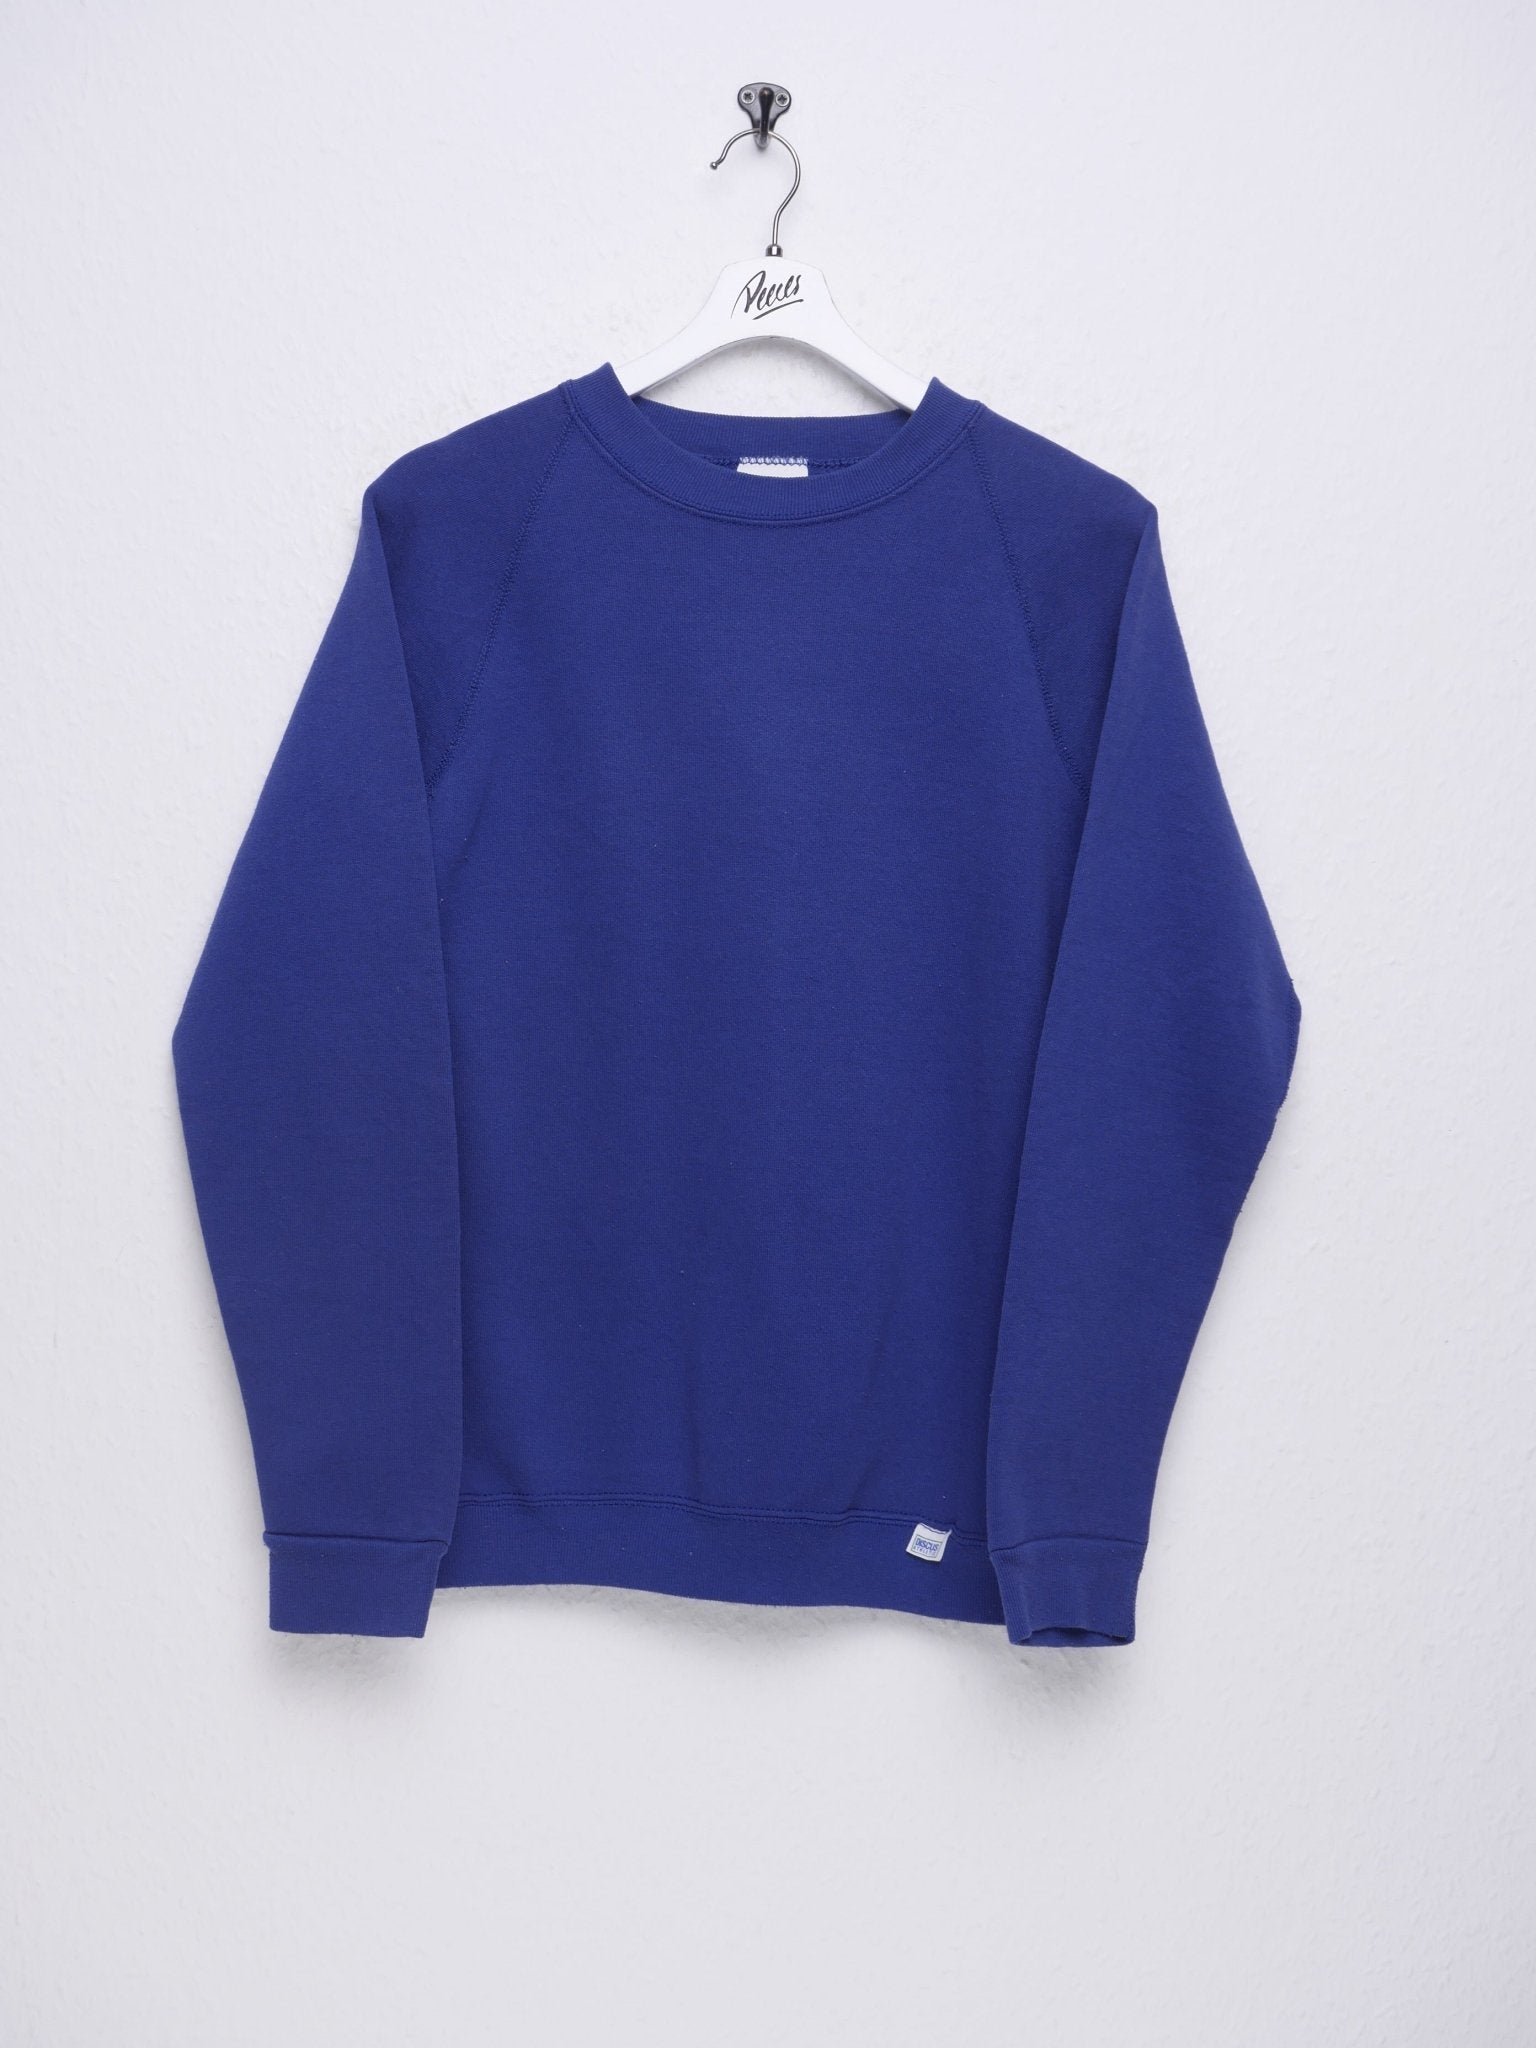 Basic Blue Vintage Sweater - Peeces